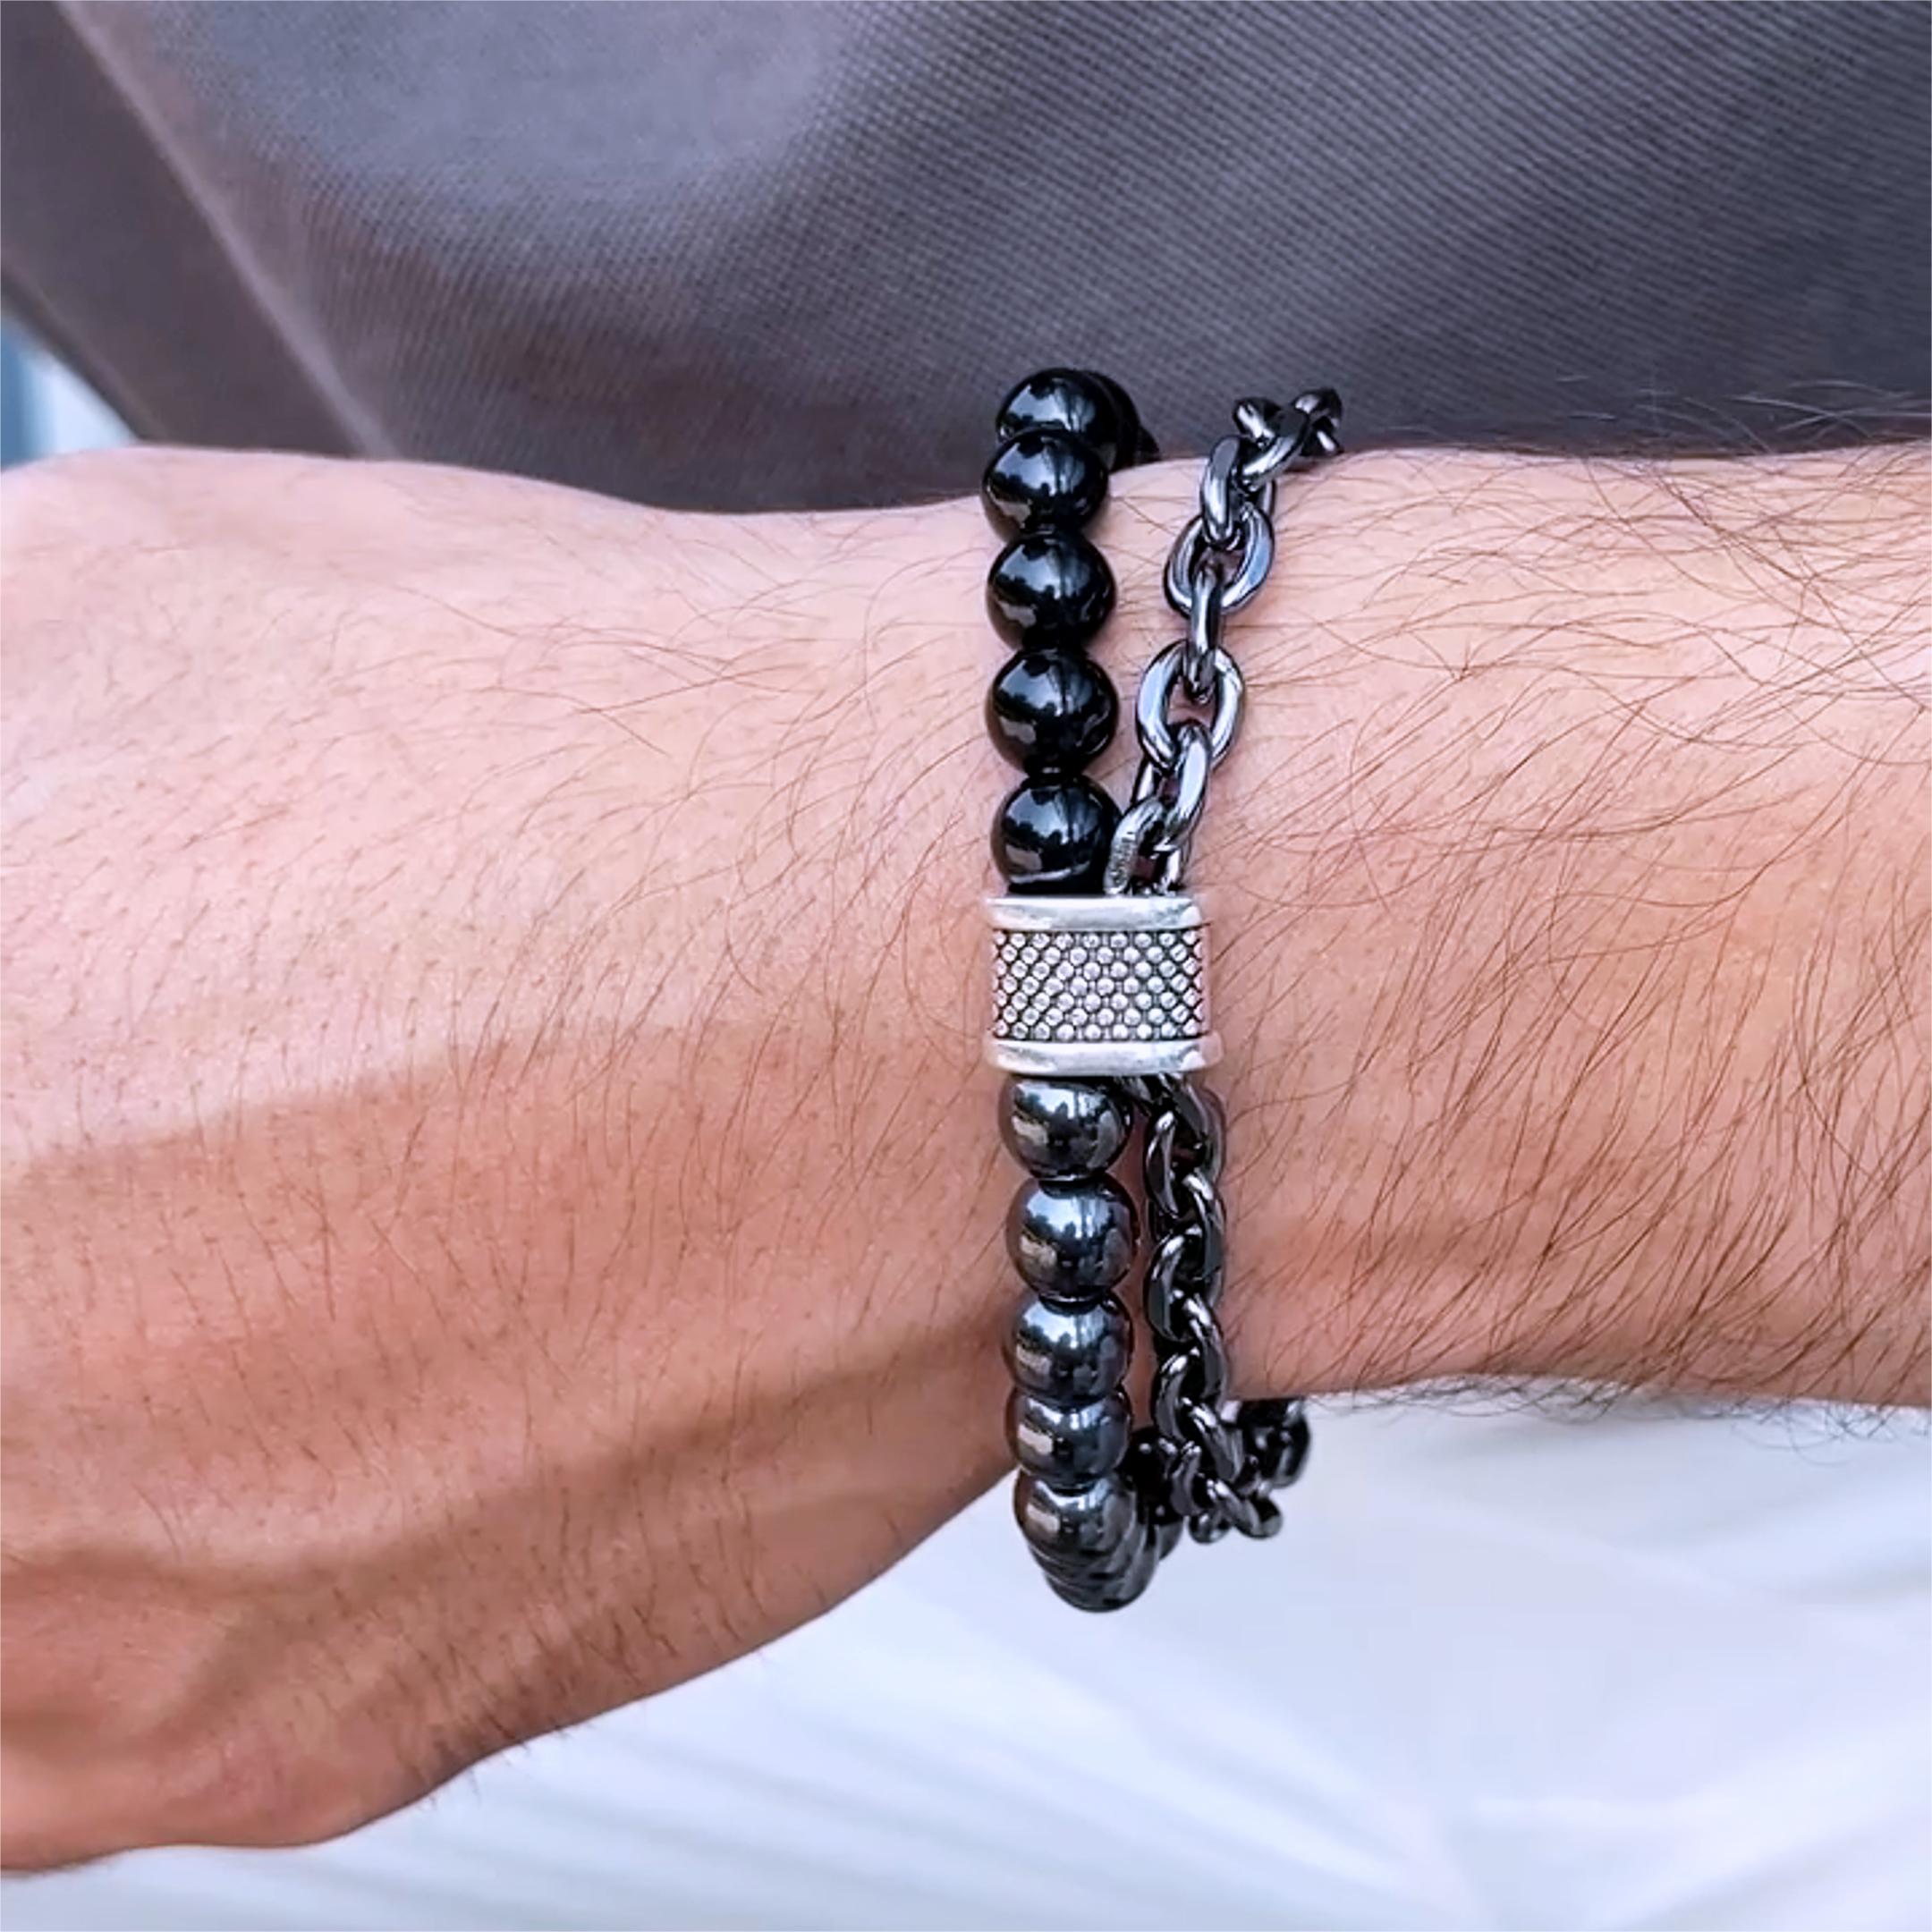 Natural Healing Stone Bead Chain Layer Bracelet